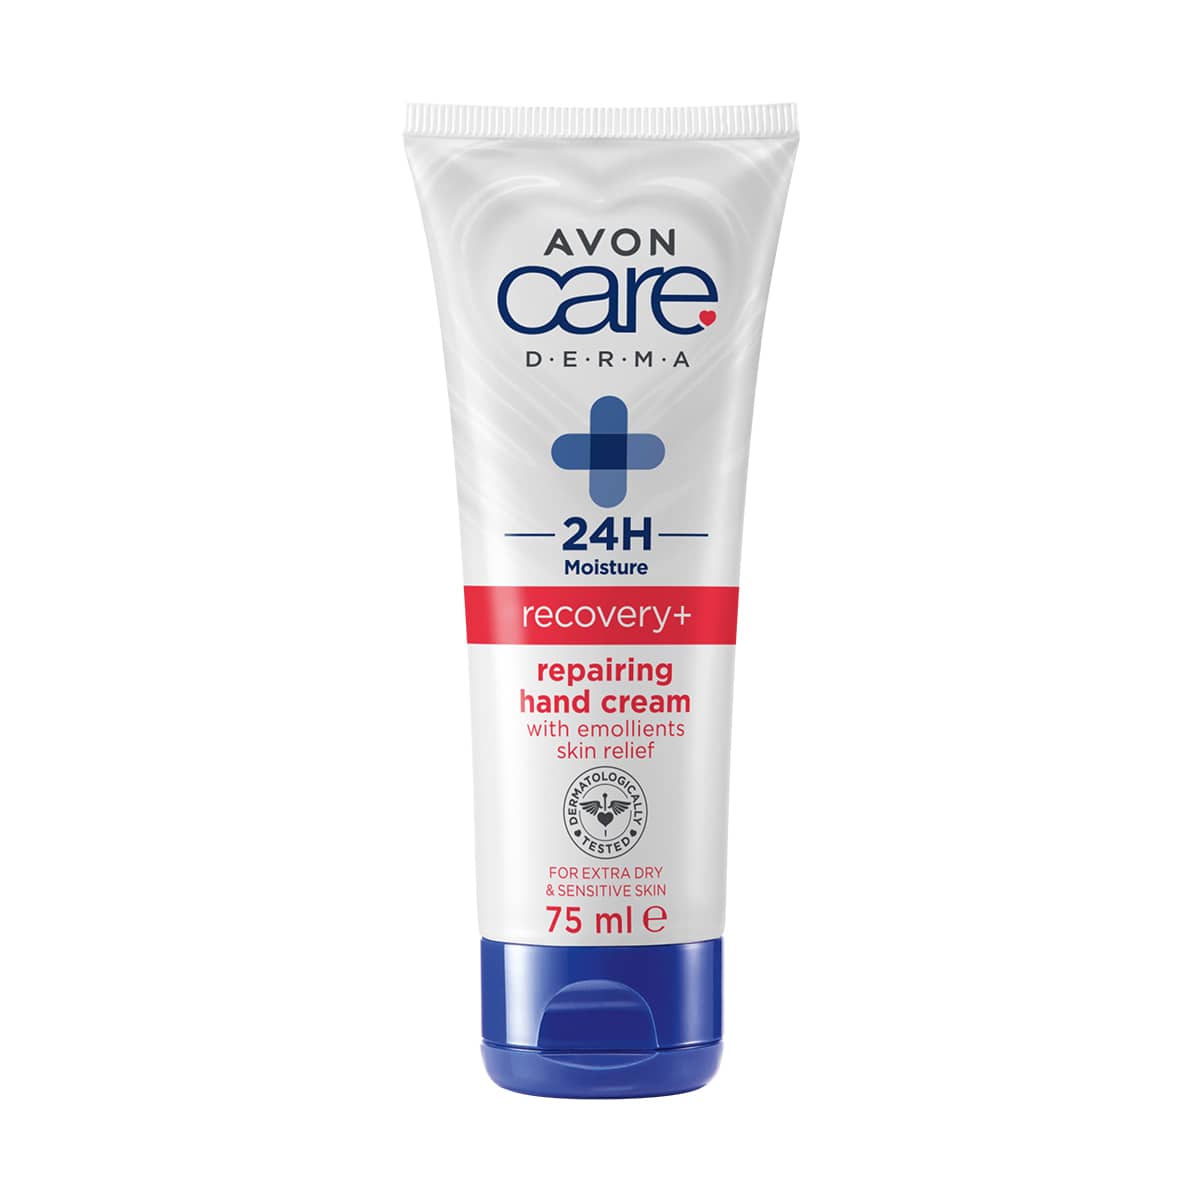 Avon Care Derma Recovery+ Hand Cream 75ml